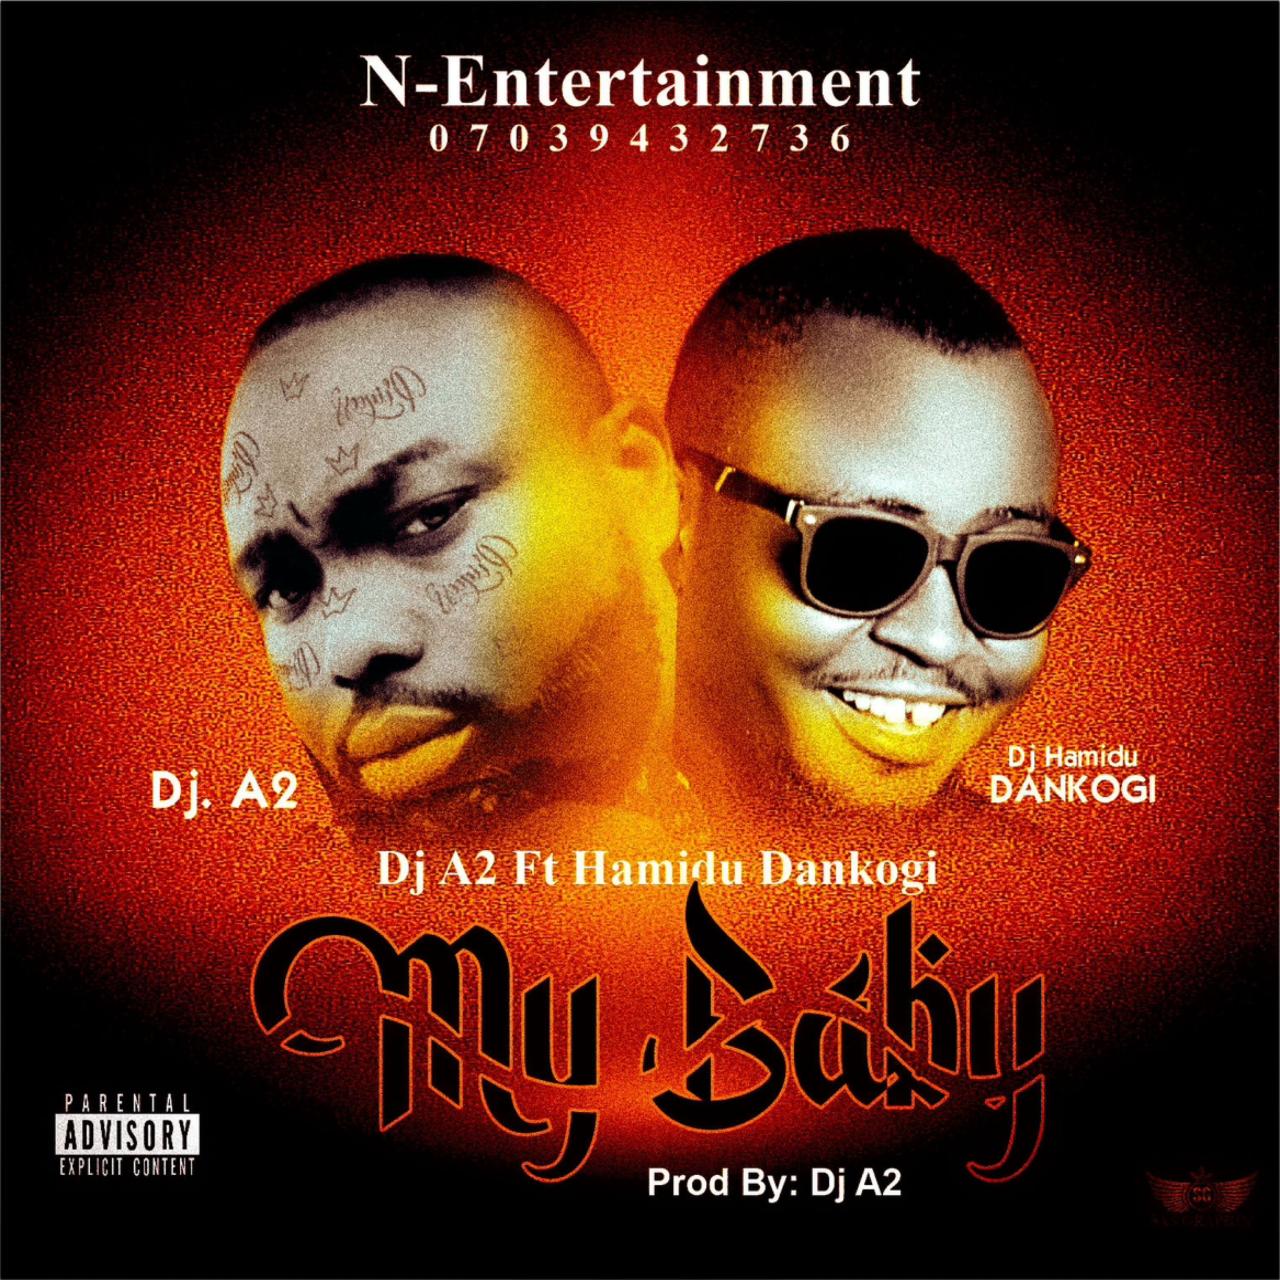 My baby by Dj a2: Listen on Audiomack